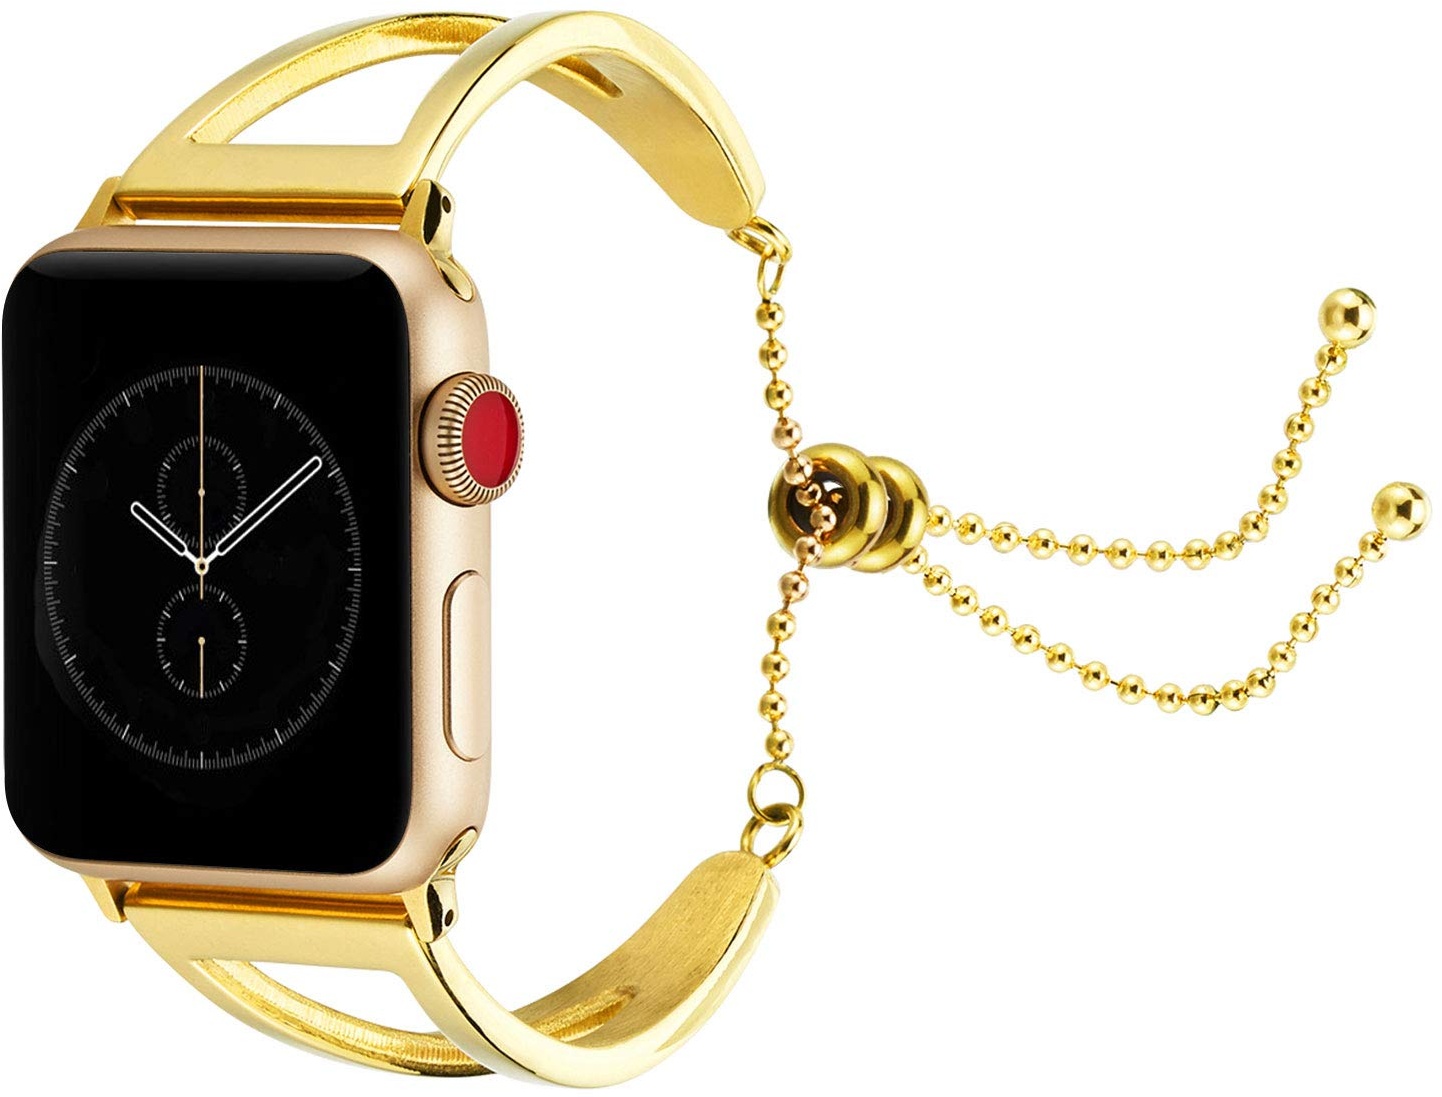 Kompatibel Apple iWatch Armband 38mm Edelstahl Series 3 Gold, Edelstahl Armband iWatch Strap Ersatz Handschlaufe Uhrenarmband Ersatzband für Apple Watch Series 4/3/2/1 38mm 40mm,Sport,Edition